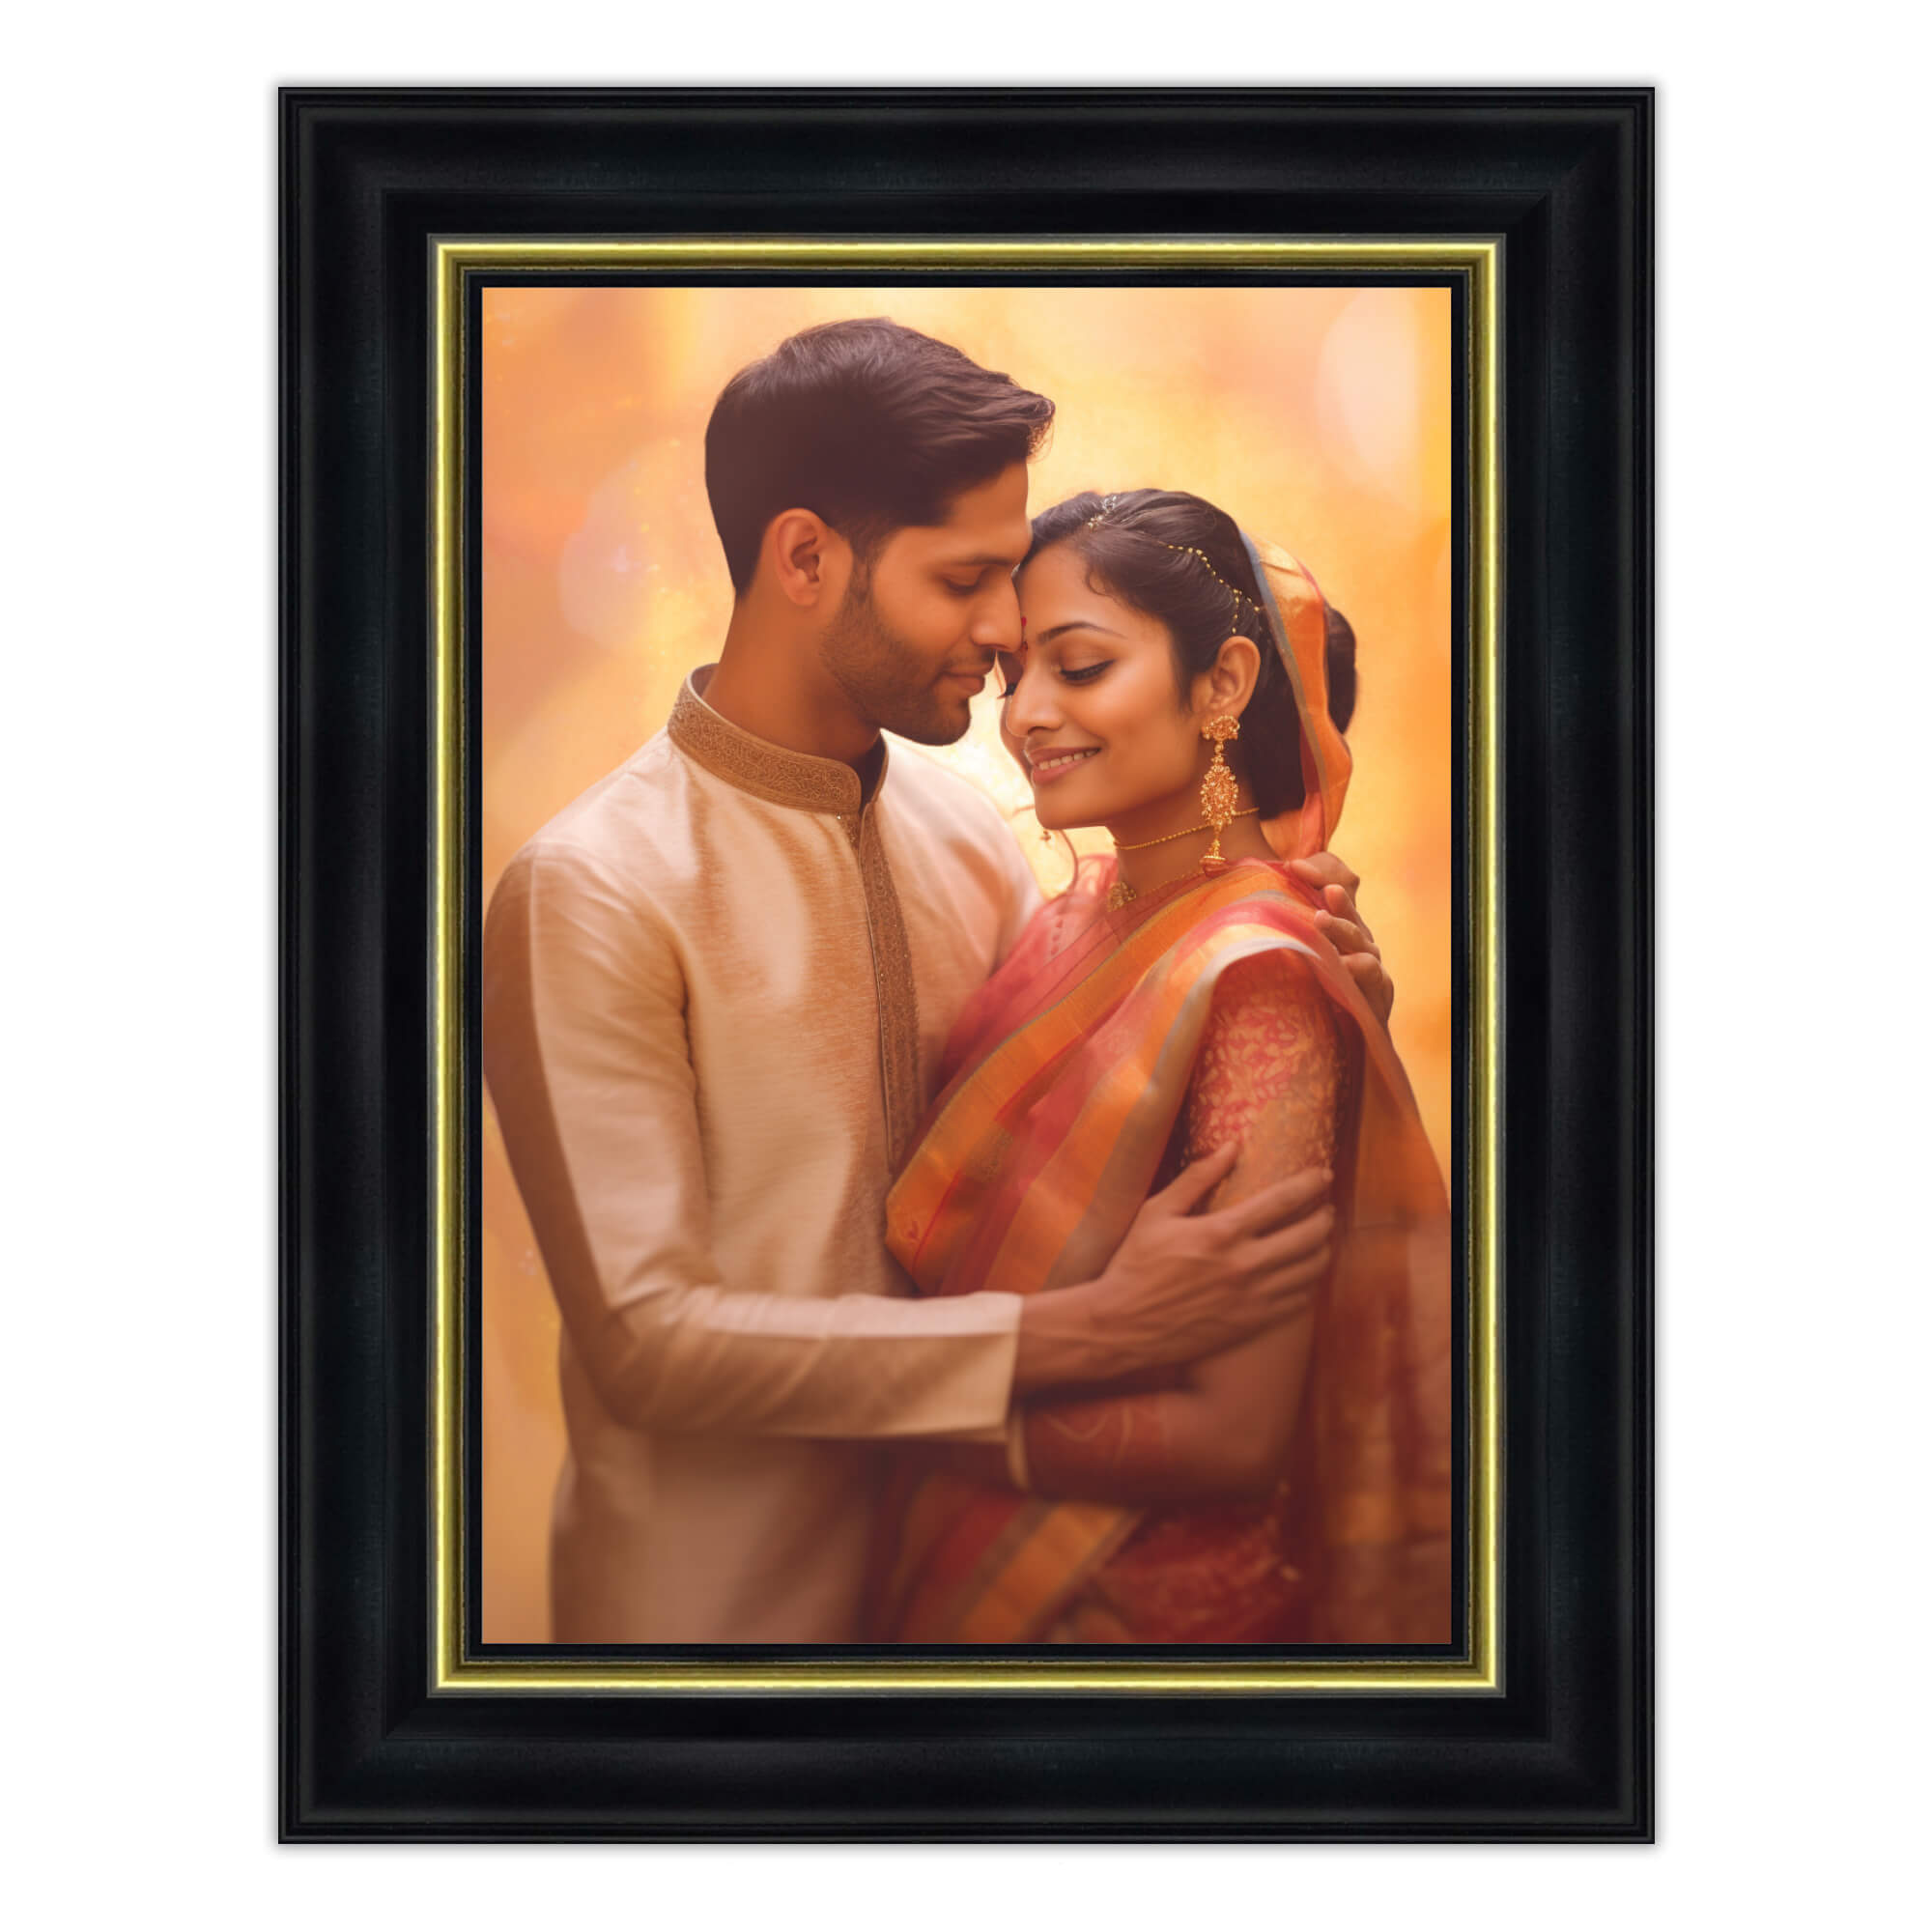 Framebazaar: India's Best Online Photo Printing & Framing Company